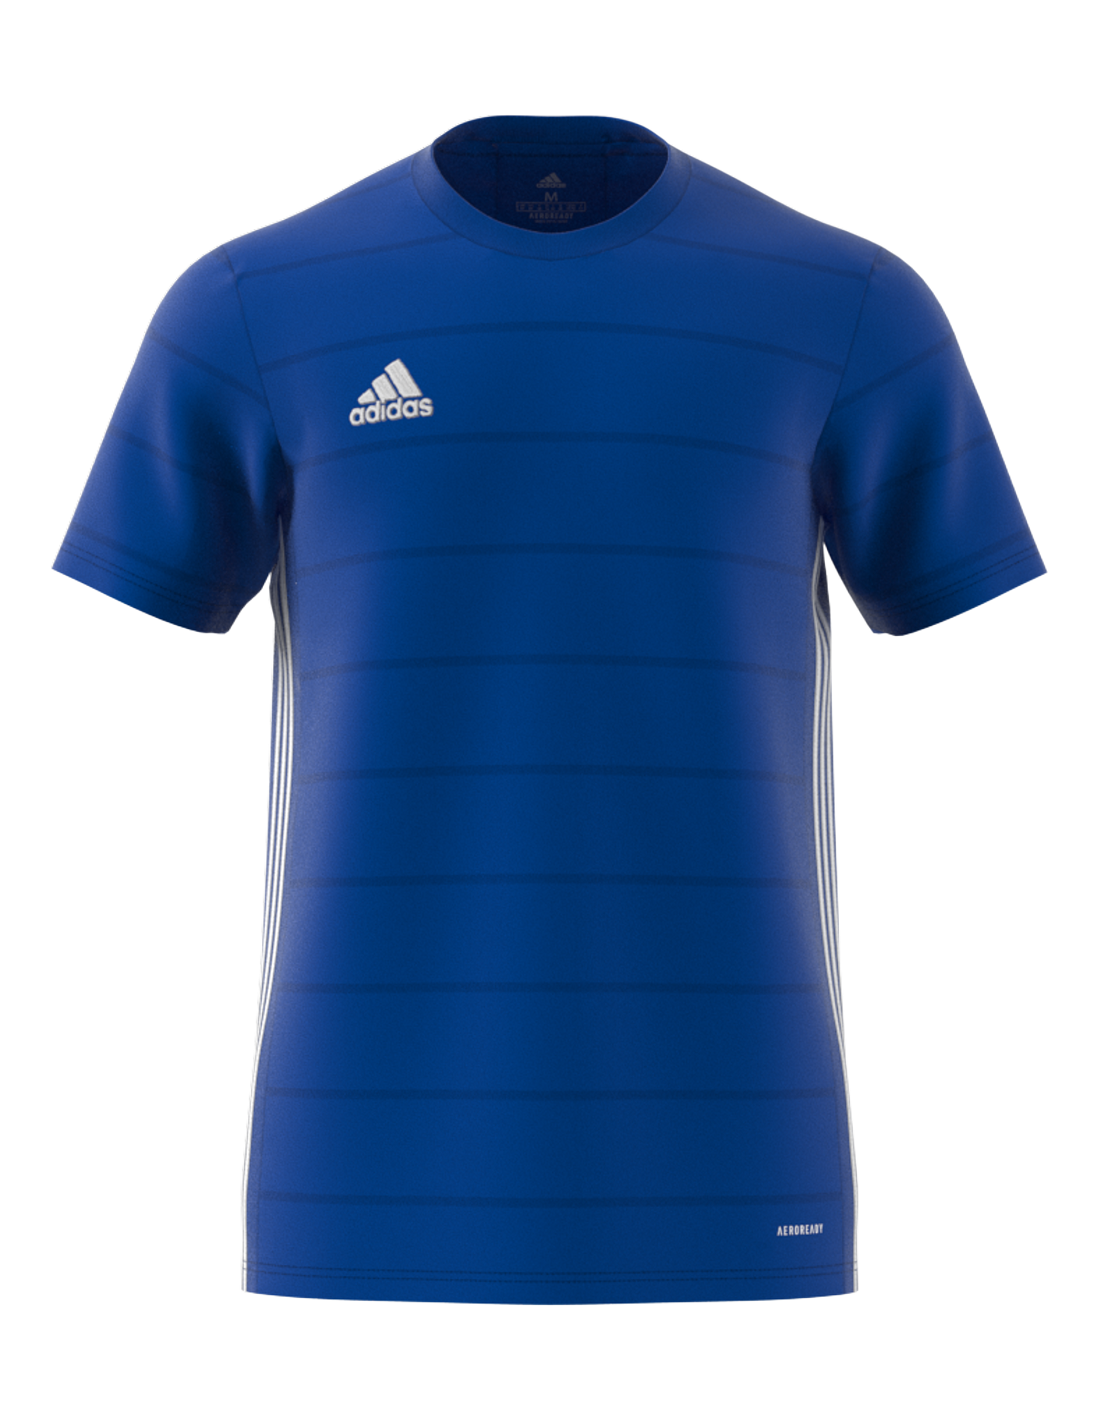 Tee-Shirt Adidas Homme Campeon 21 Bleu Roi